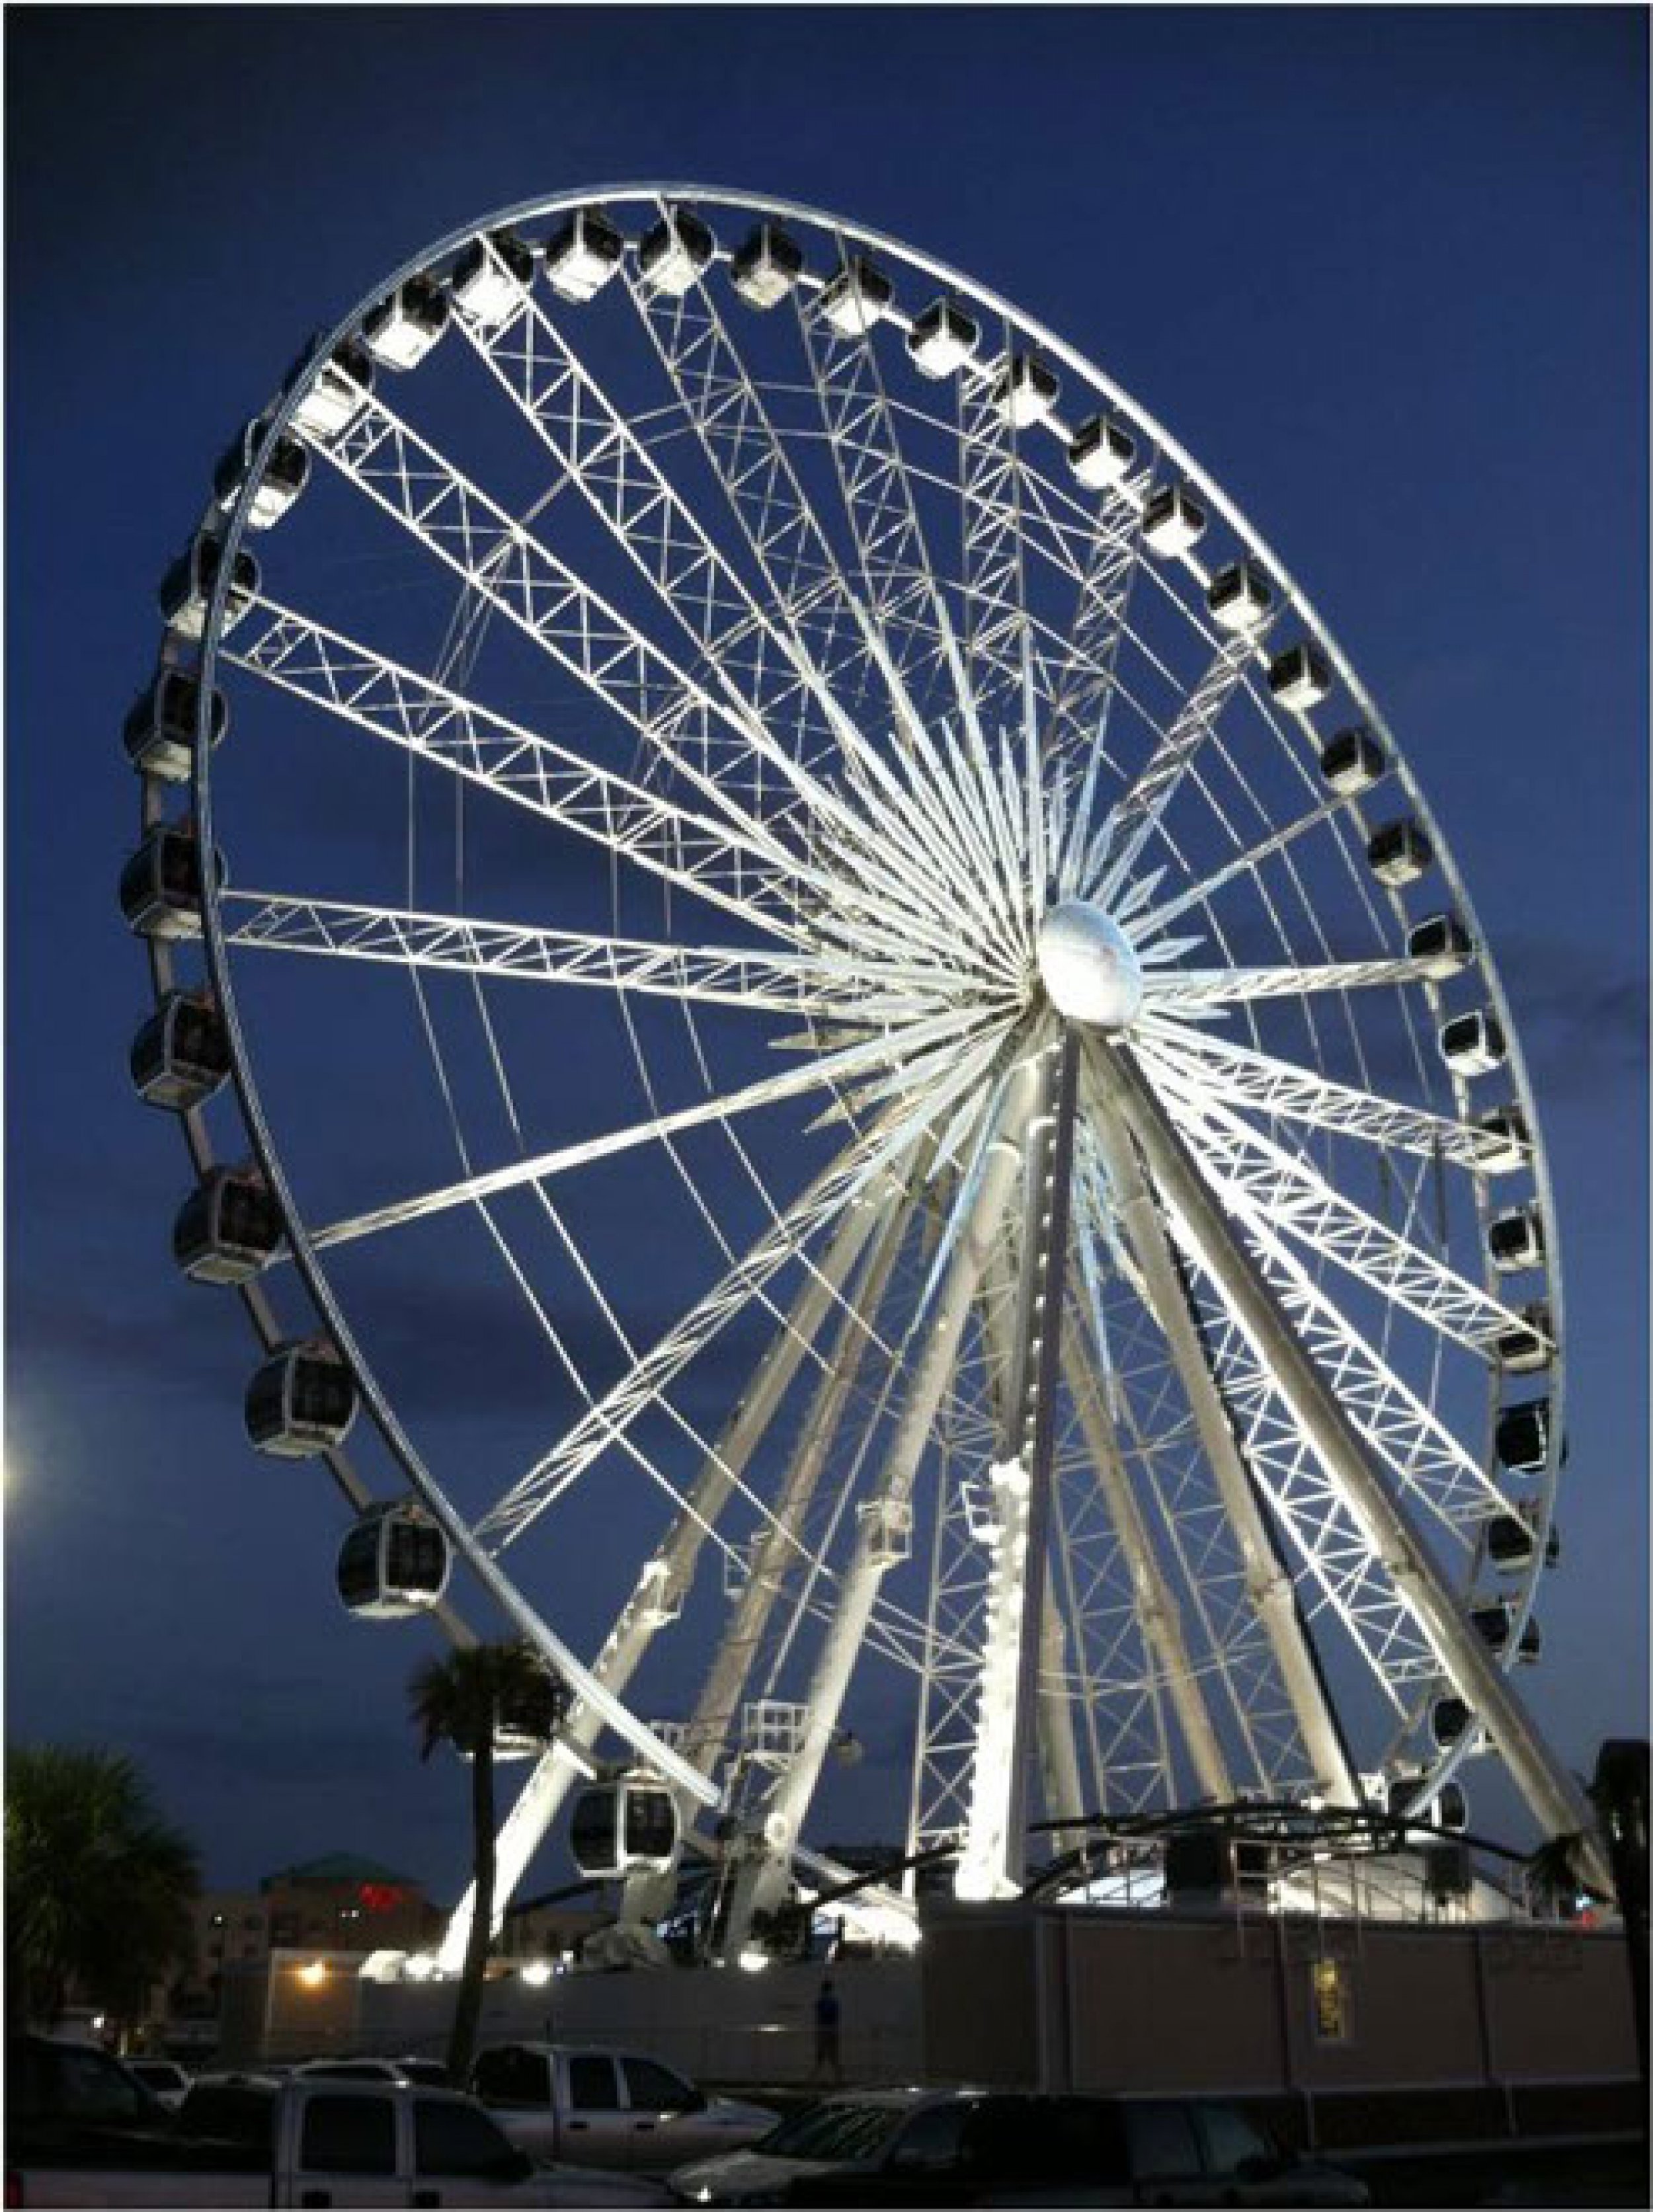 Skyview Atlanta 200 Foot Ferris Wheel Opens In Atlanta Ibtimes